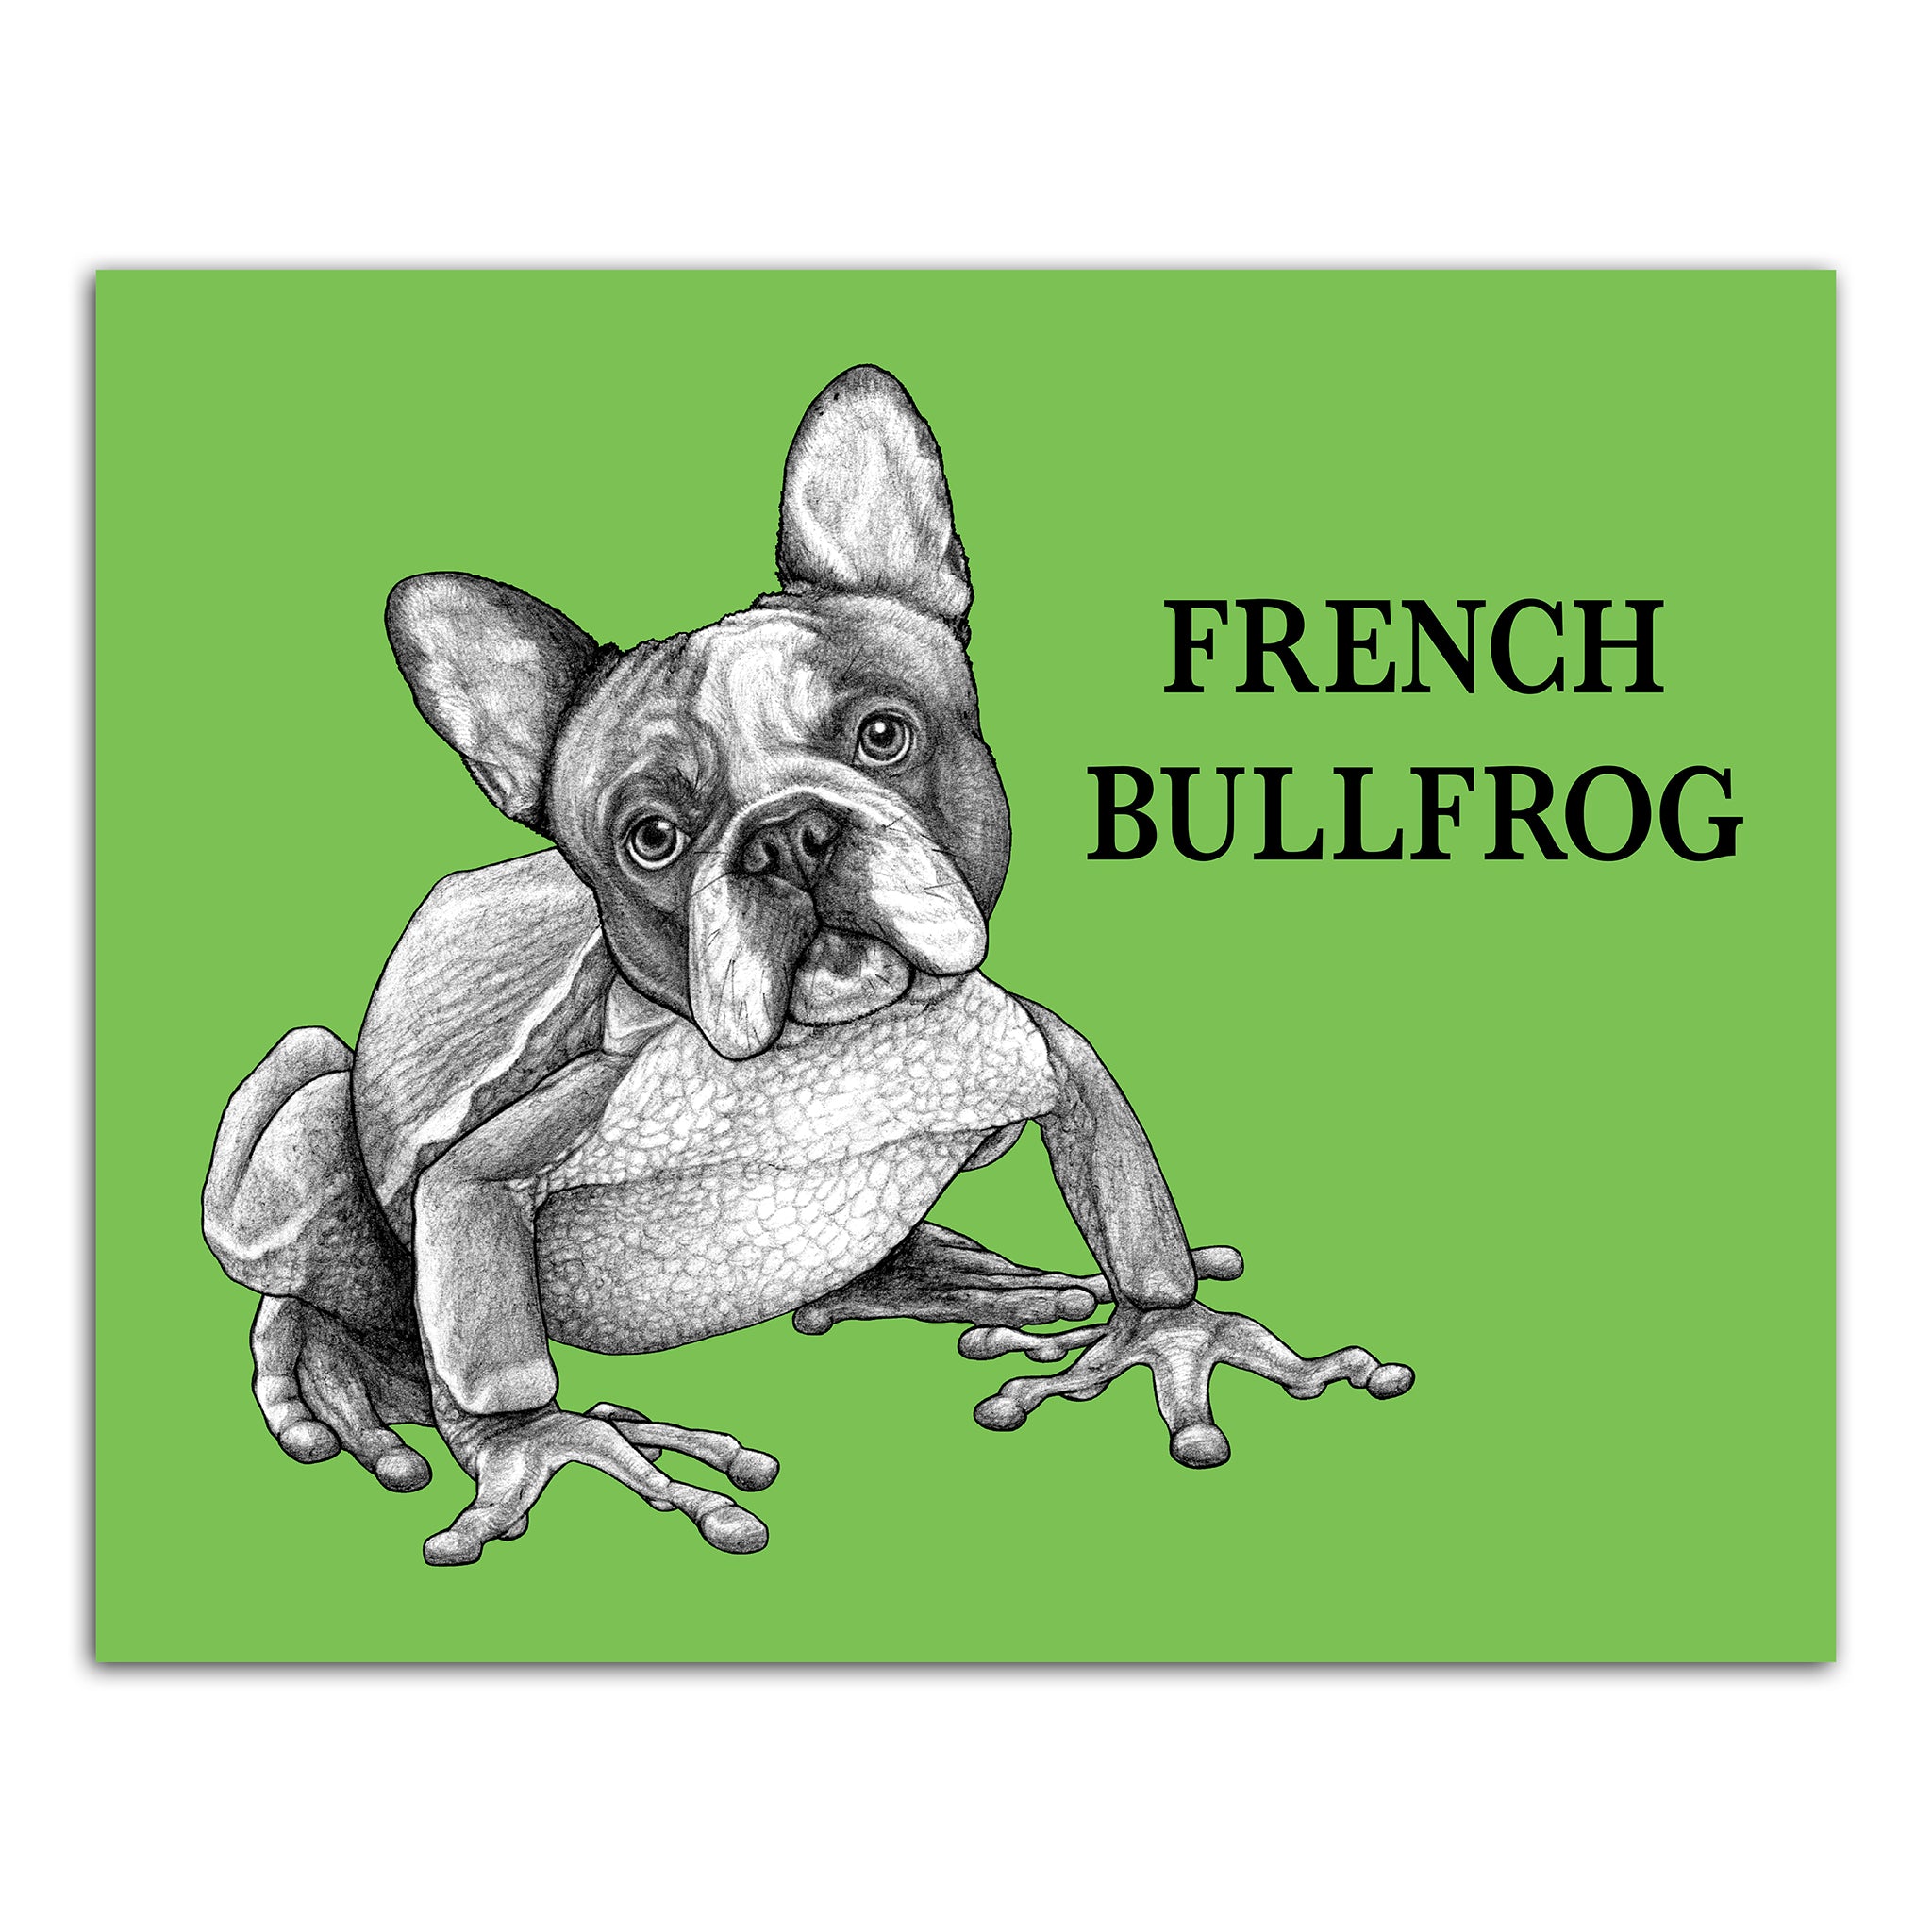 French Bullfrog | French Bulldog + Frog Hybrid Animal | 8x10" Color Print